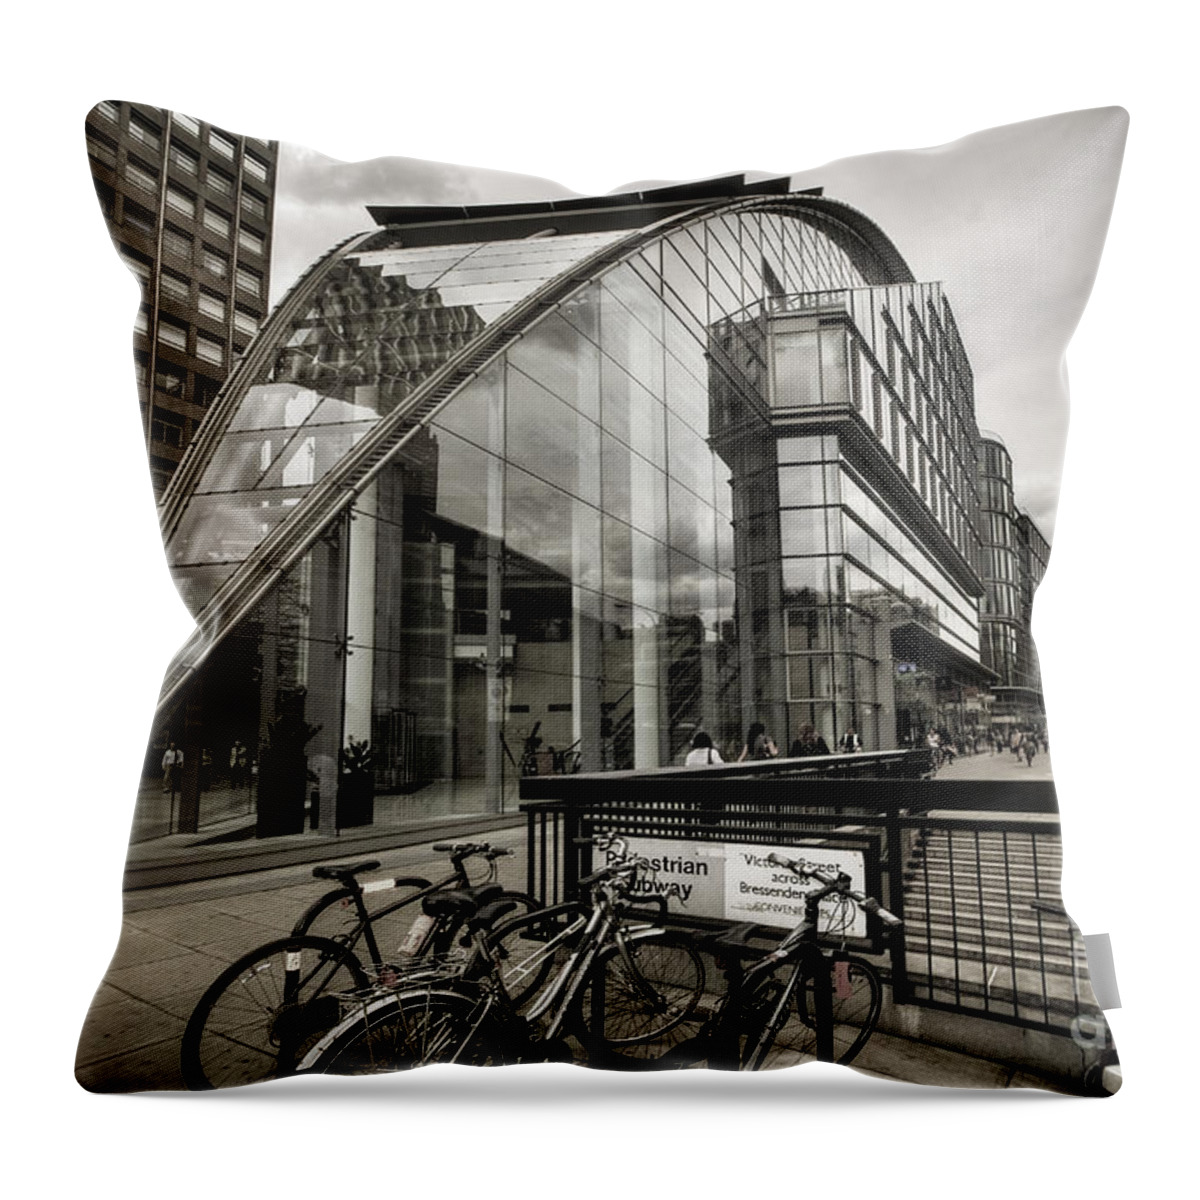 100 Victoria Street Throw Pillow featuring the photograph 100 Victoria Street - London by Yhun Suarez